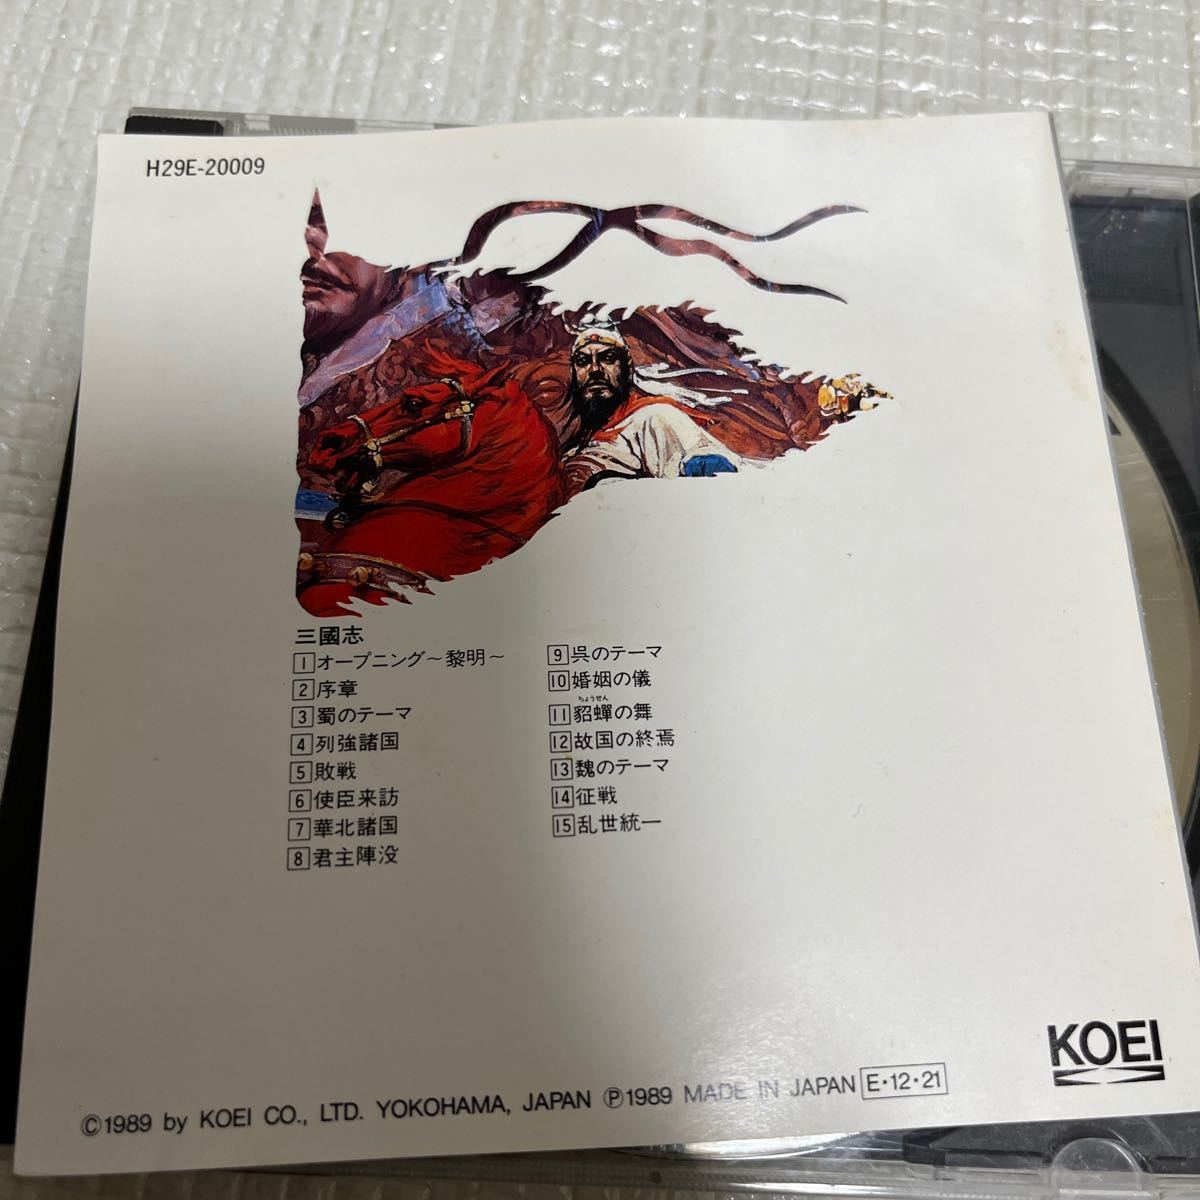 【CD】三國志Ⅱ 【H29E-20009】向谷実 ゲームミュージック サントラ KOEI_画像3